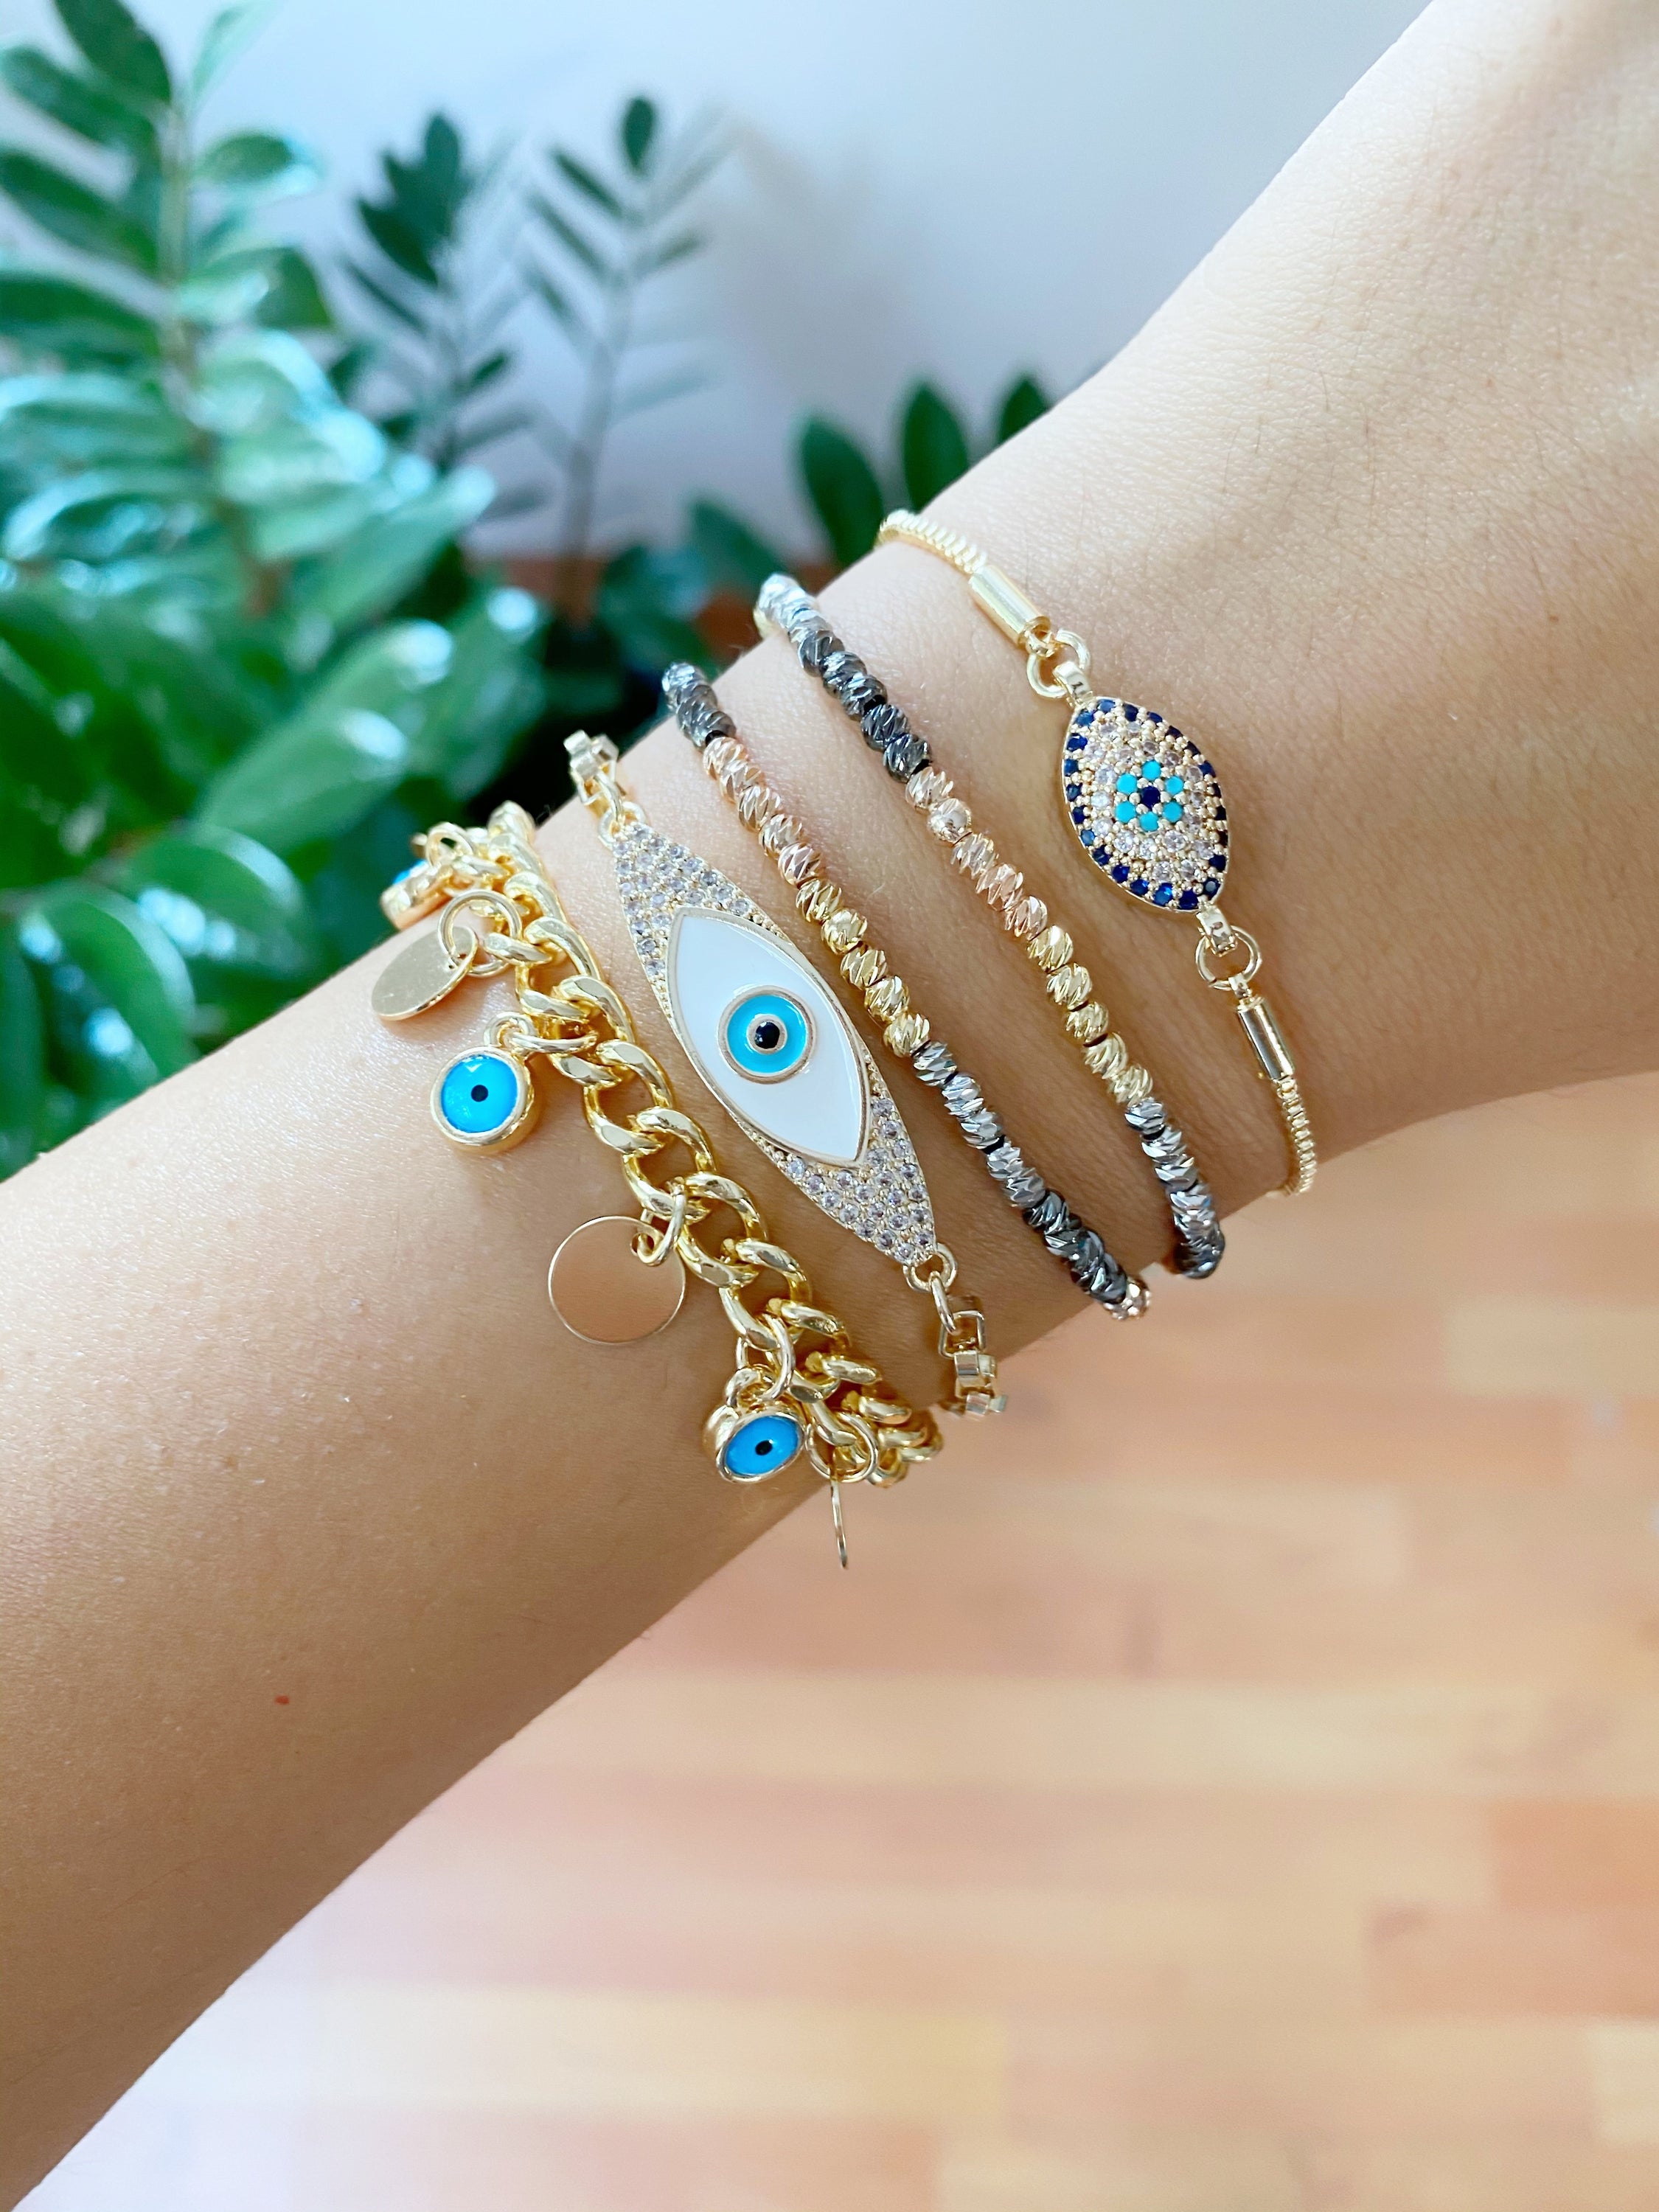 Adjustable Evil Eye Chain Bracelet Set - Gold Greek Jewelry for Protection Bijou Her